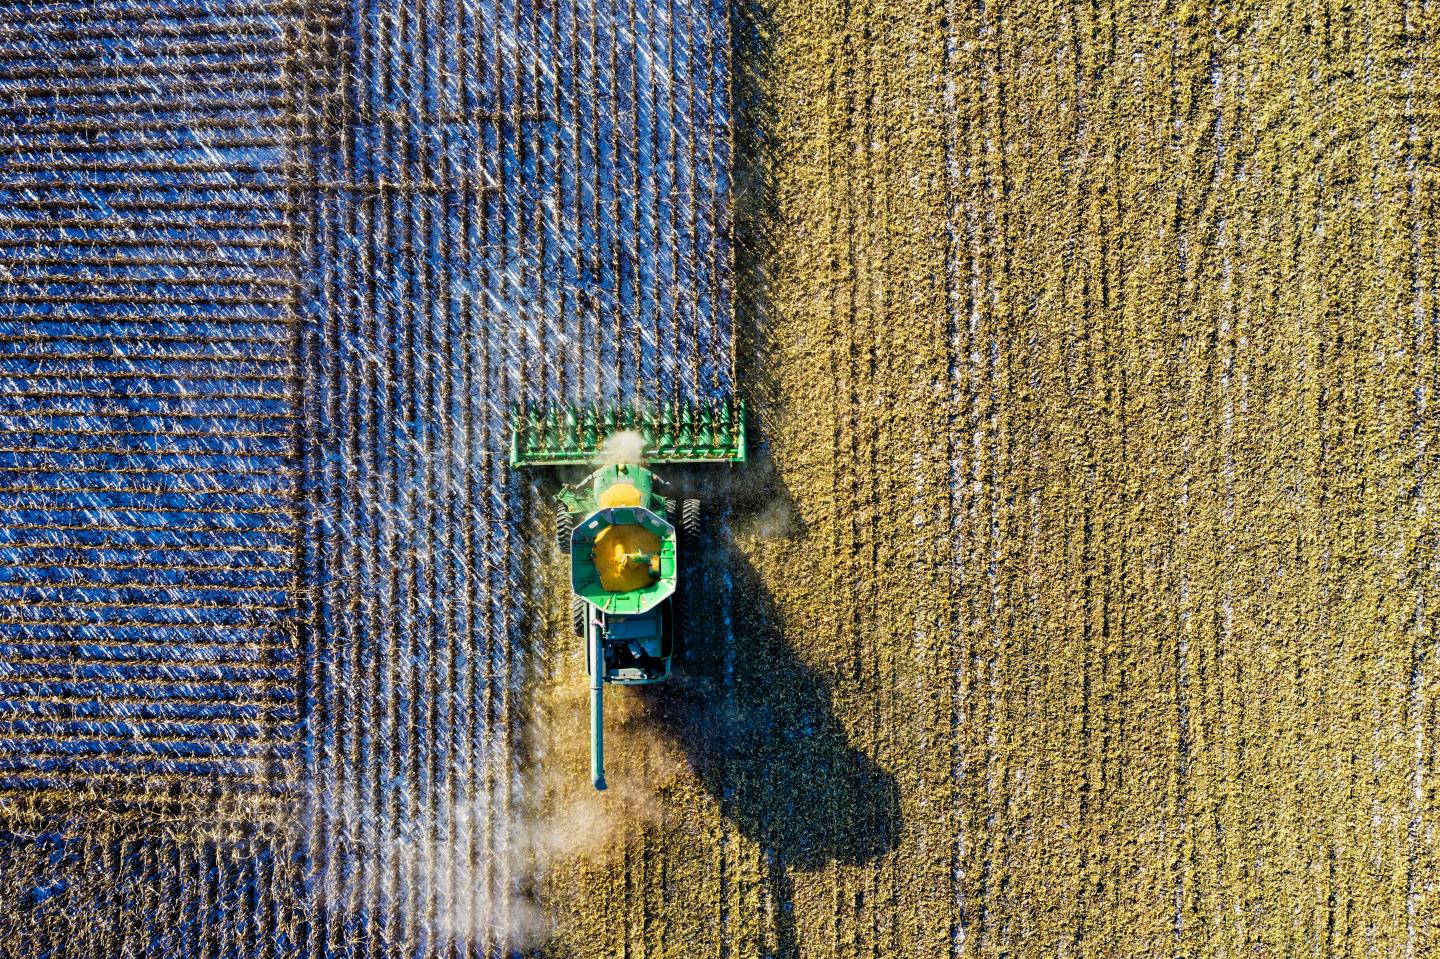 Aerial View of Harvesting